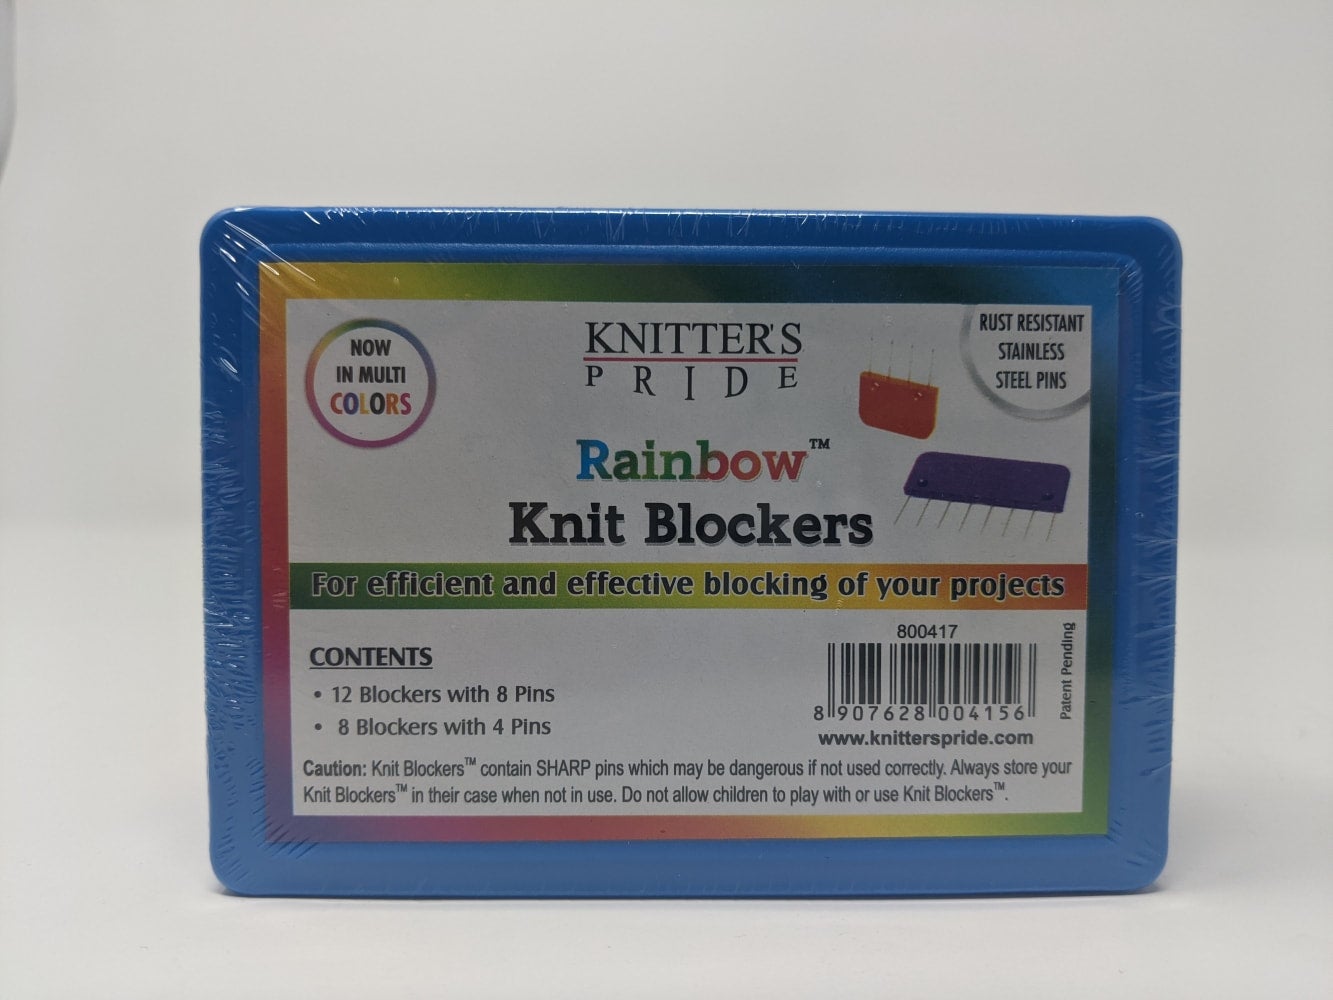  Knitter's Pride Knitter's Knit Blocking & Pins Kit